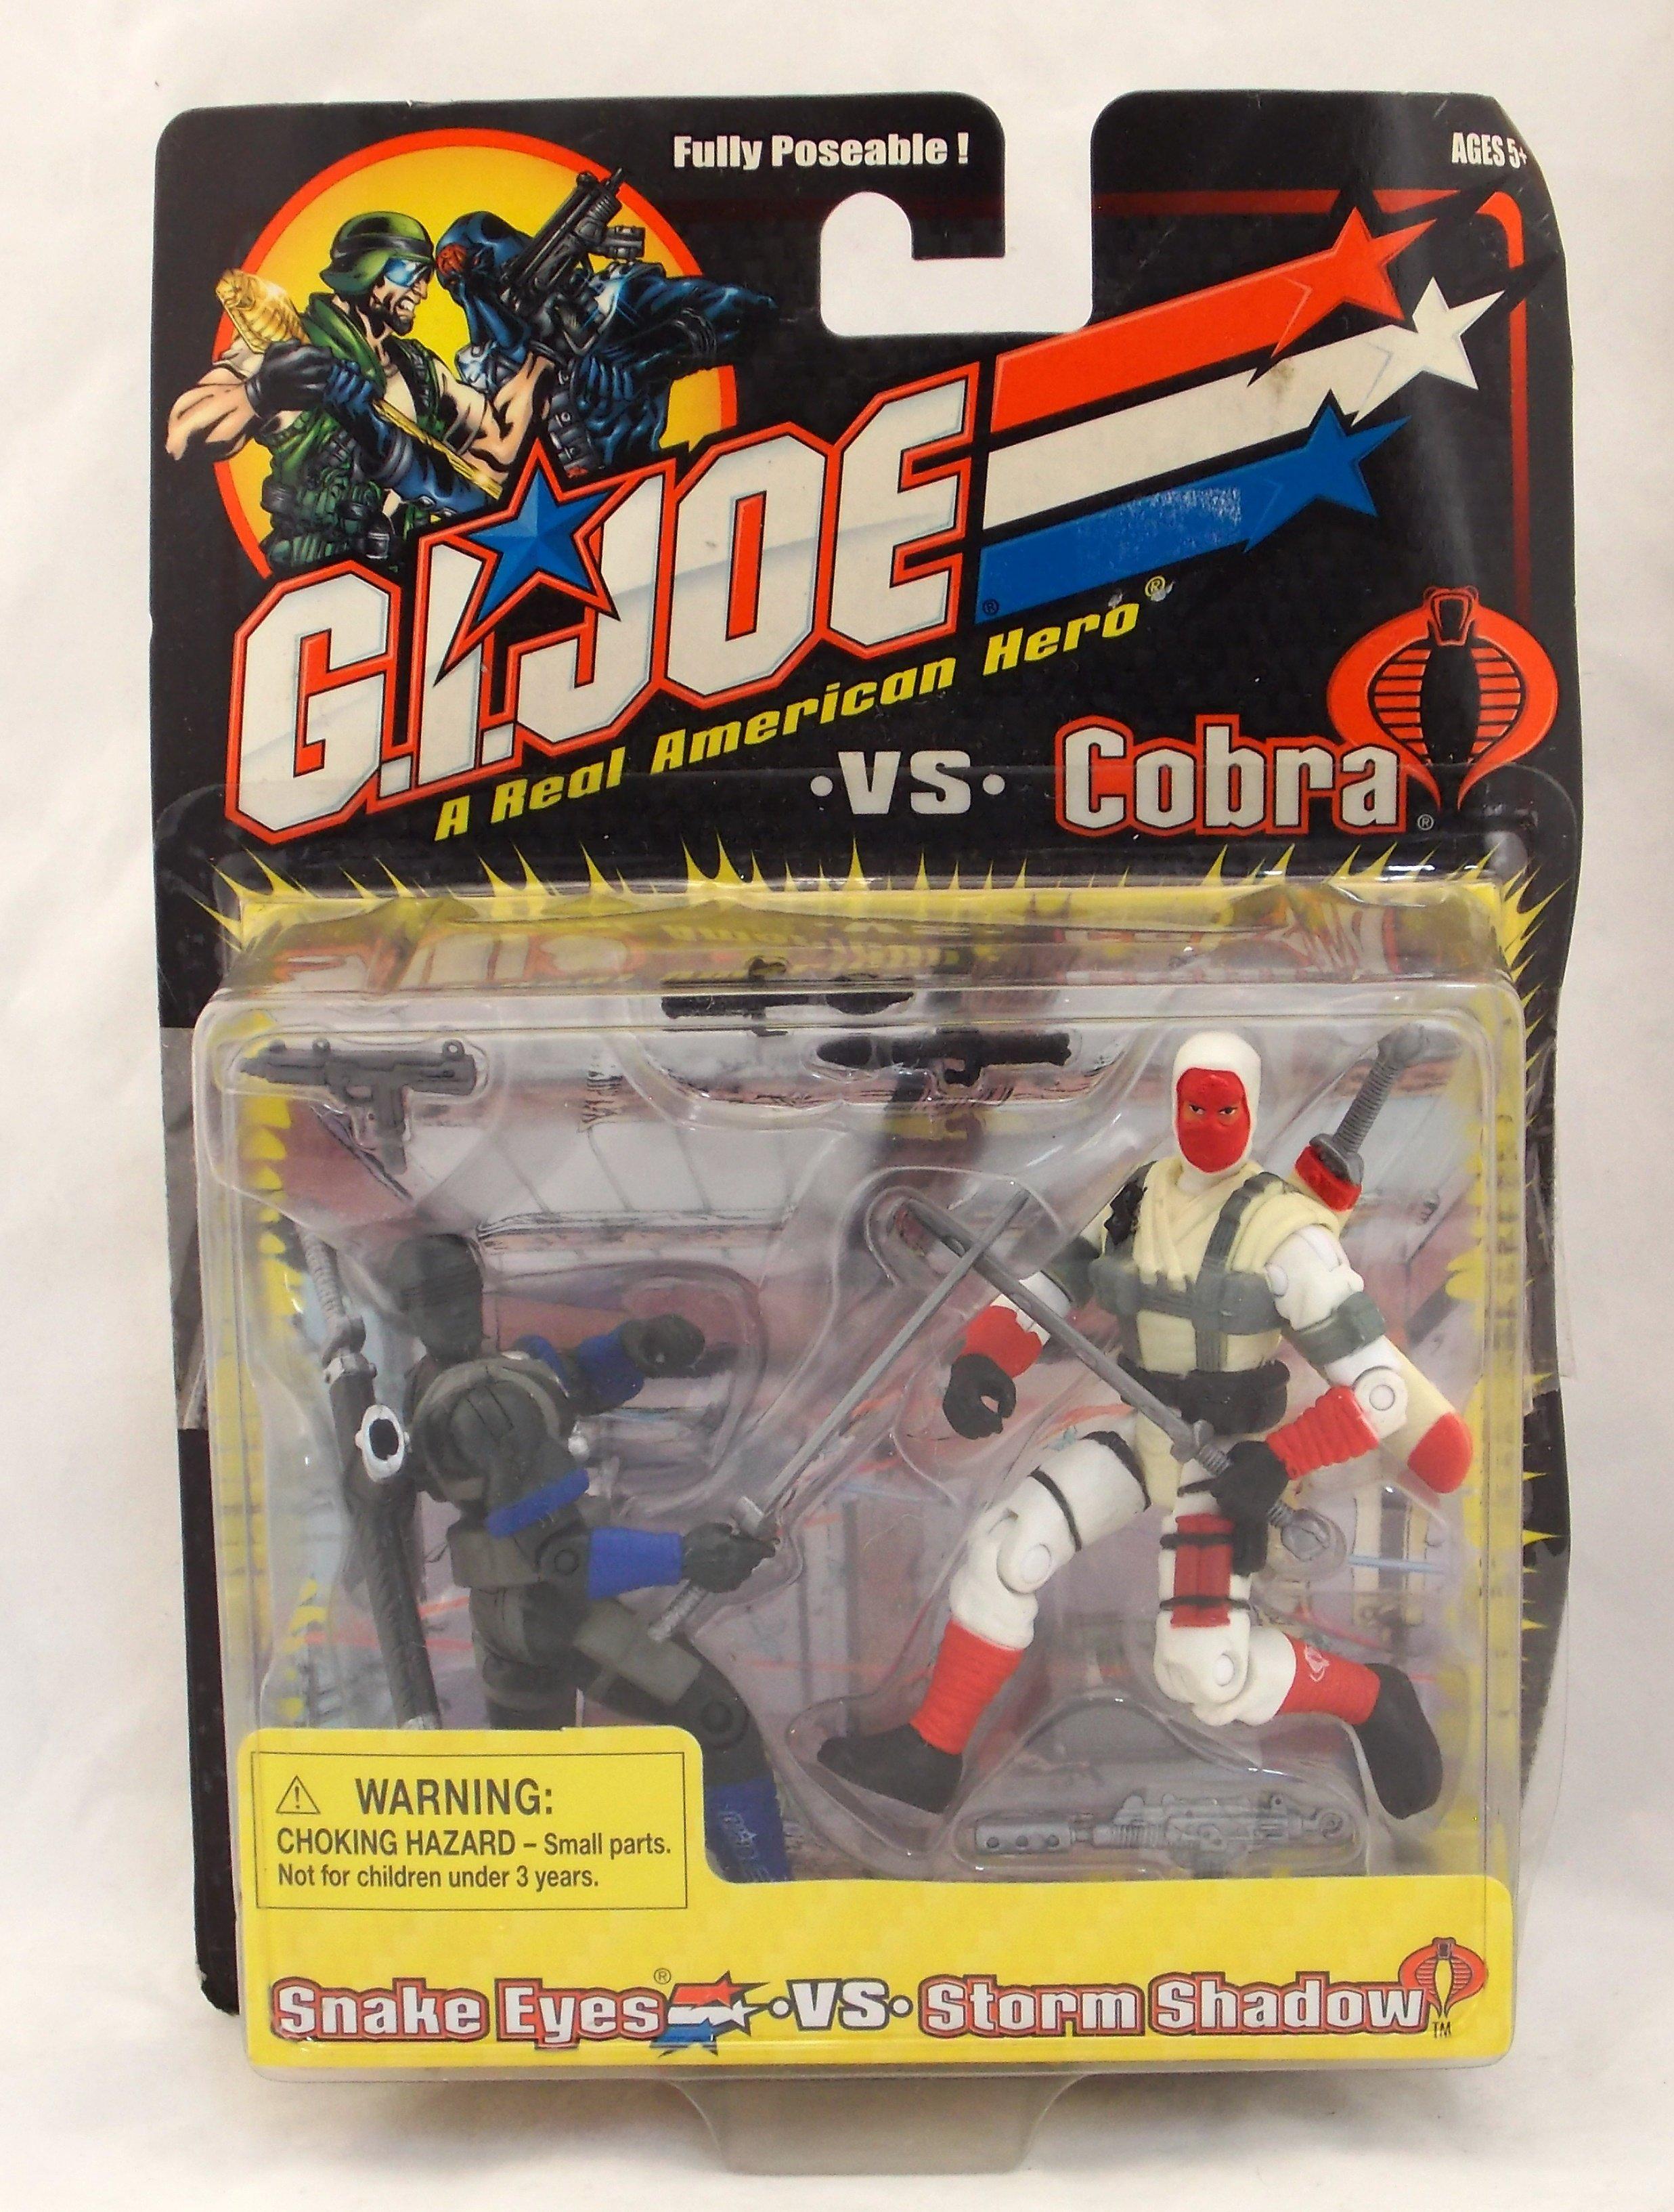 GI Joe Vs Cobra Snake Eyes Vs Stormshadow Carded Figure w/ Bonus Video